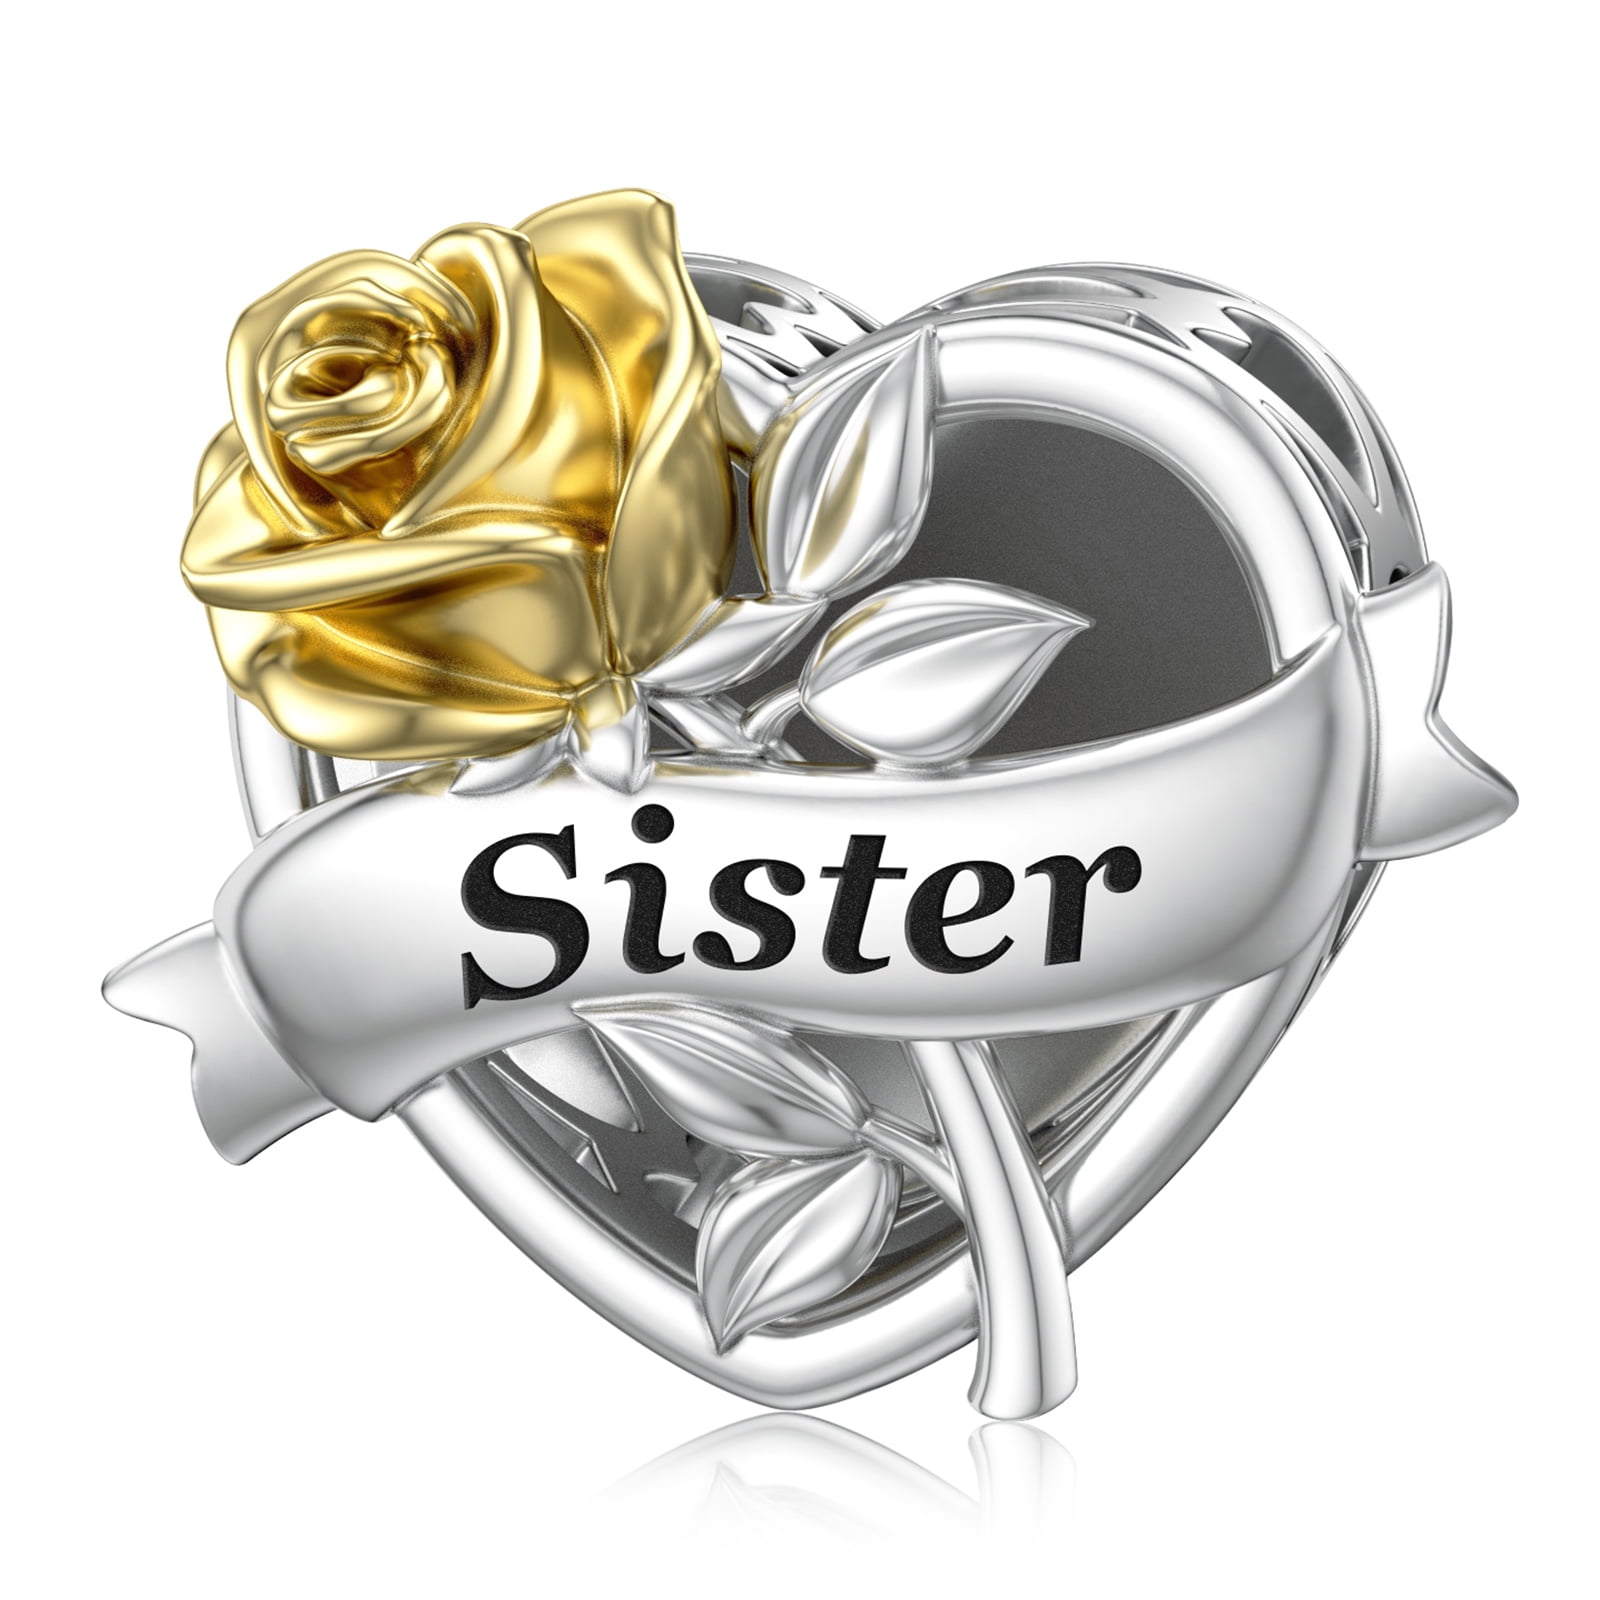 JIAYIQI Sister Charms Fit Charm Bracelet Love Charm Jewelry Gift